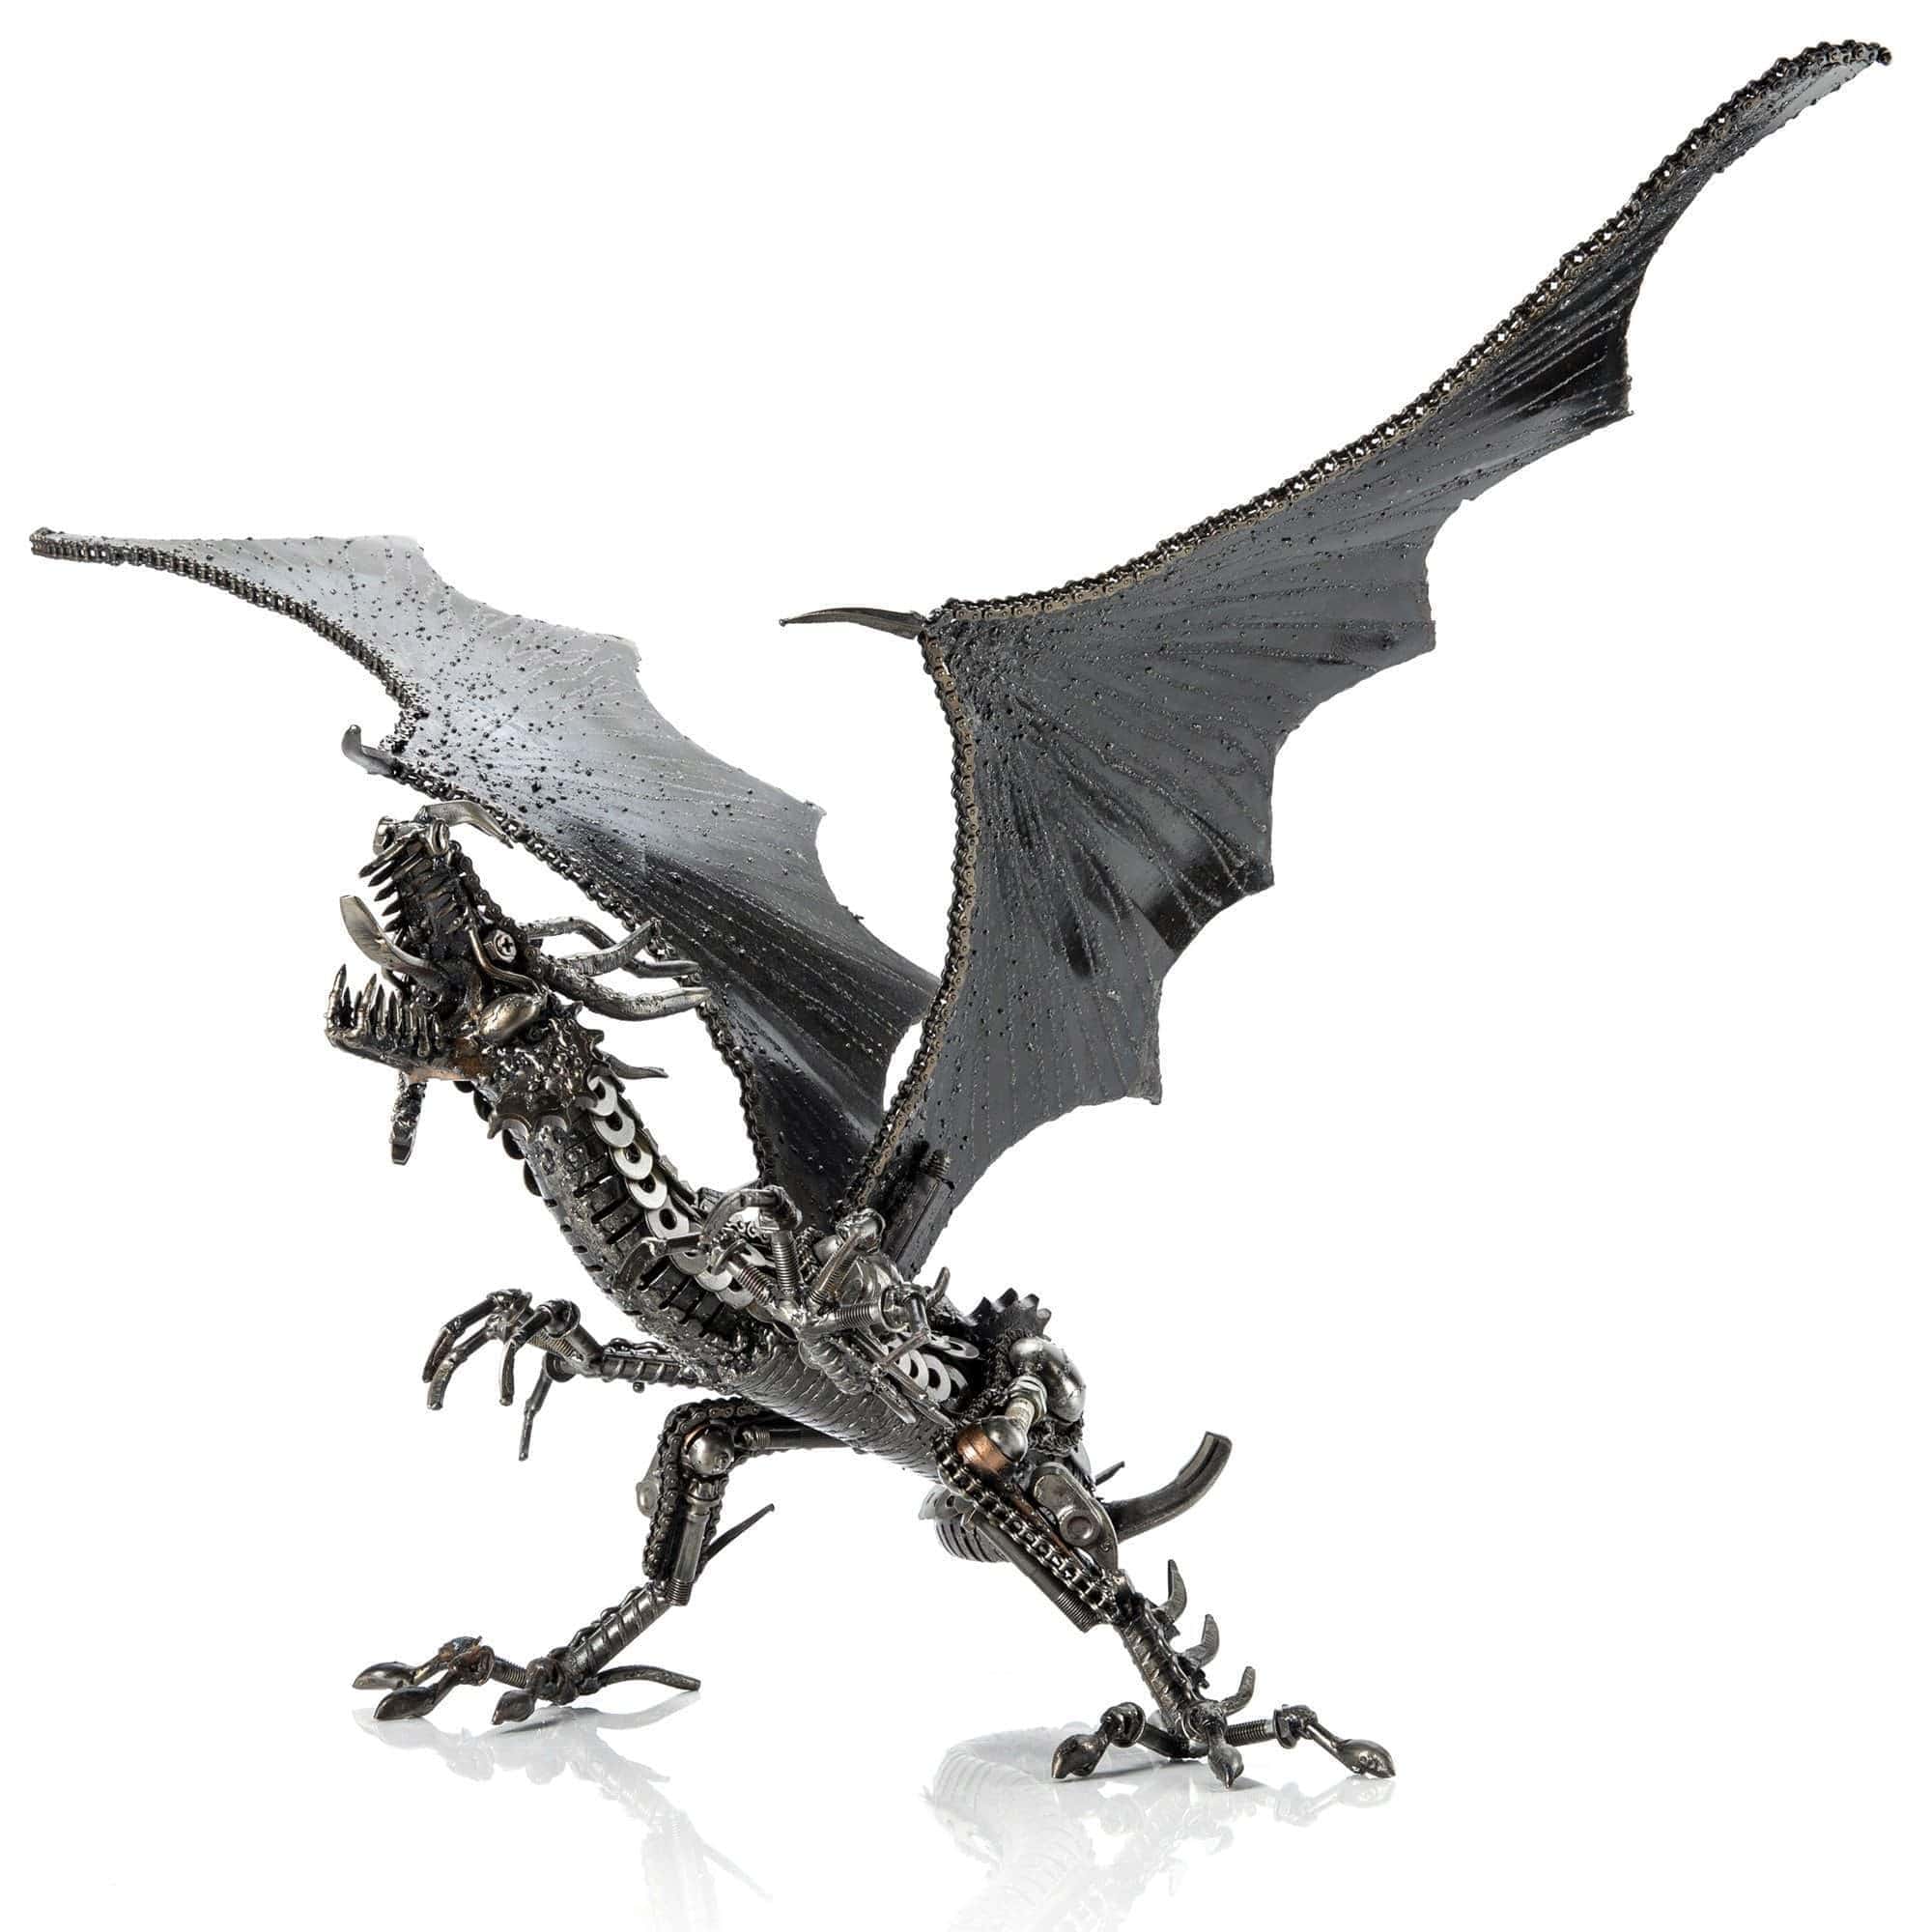 Kalifano Recycled Metal Art Small Dragon Original Recycled Metal Art Sculpture RMS-D59x70-S